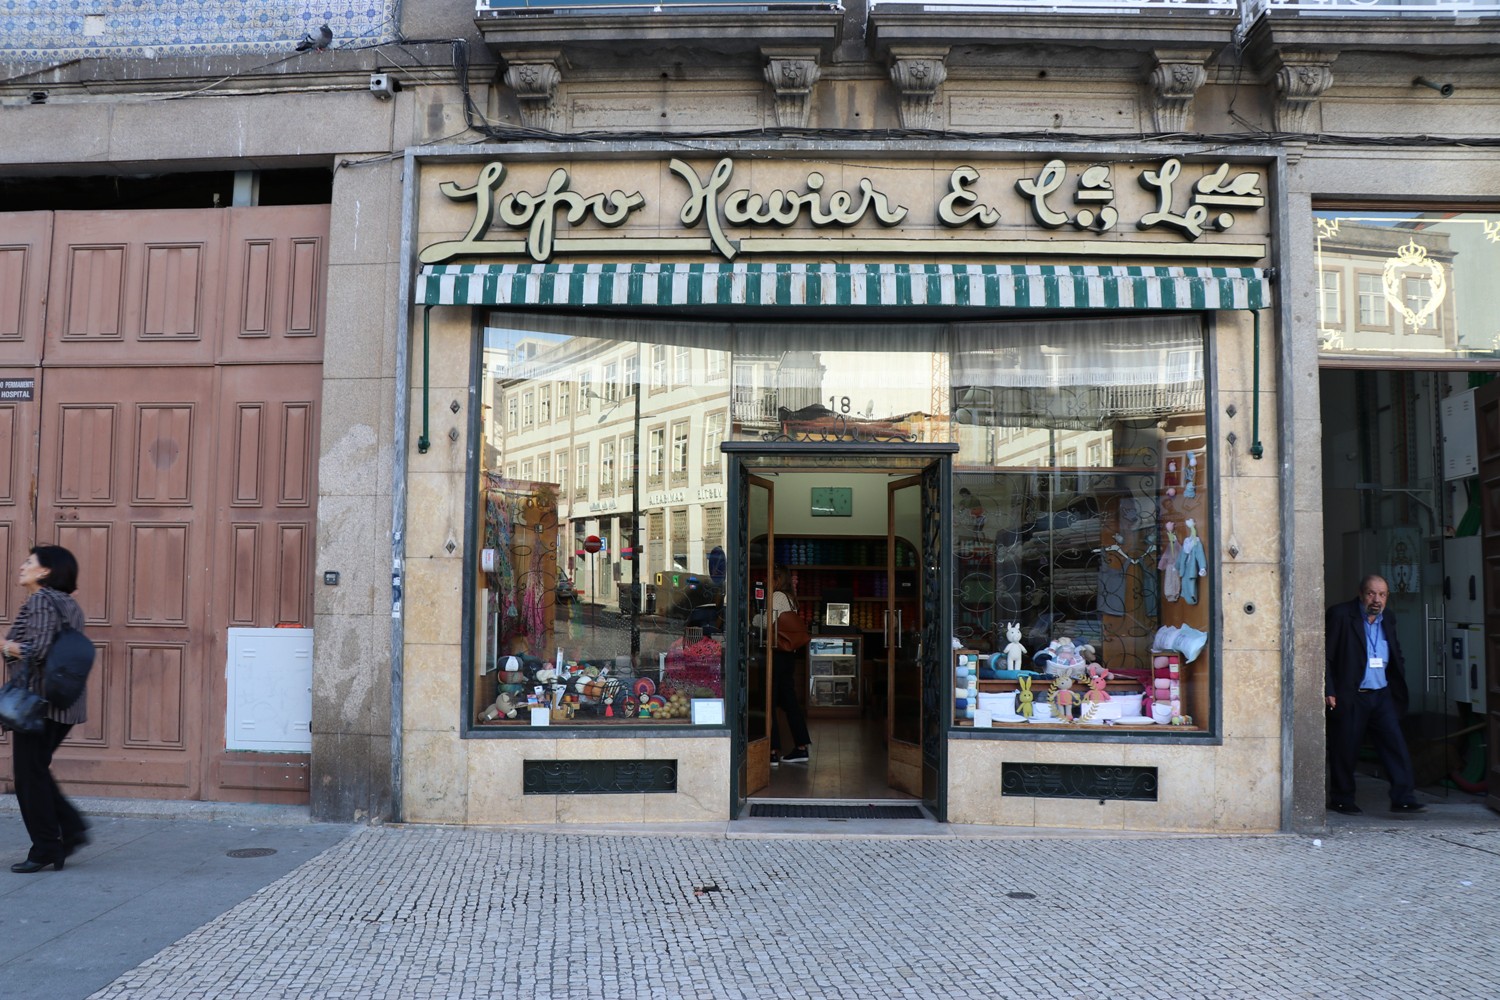 Lopo Xavier - Shops